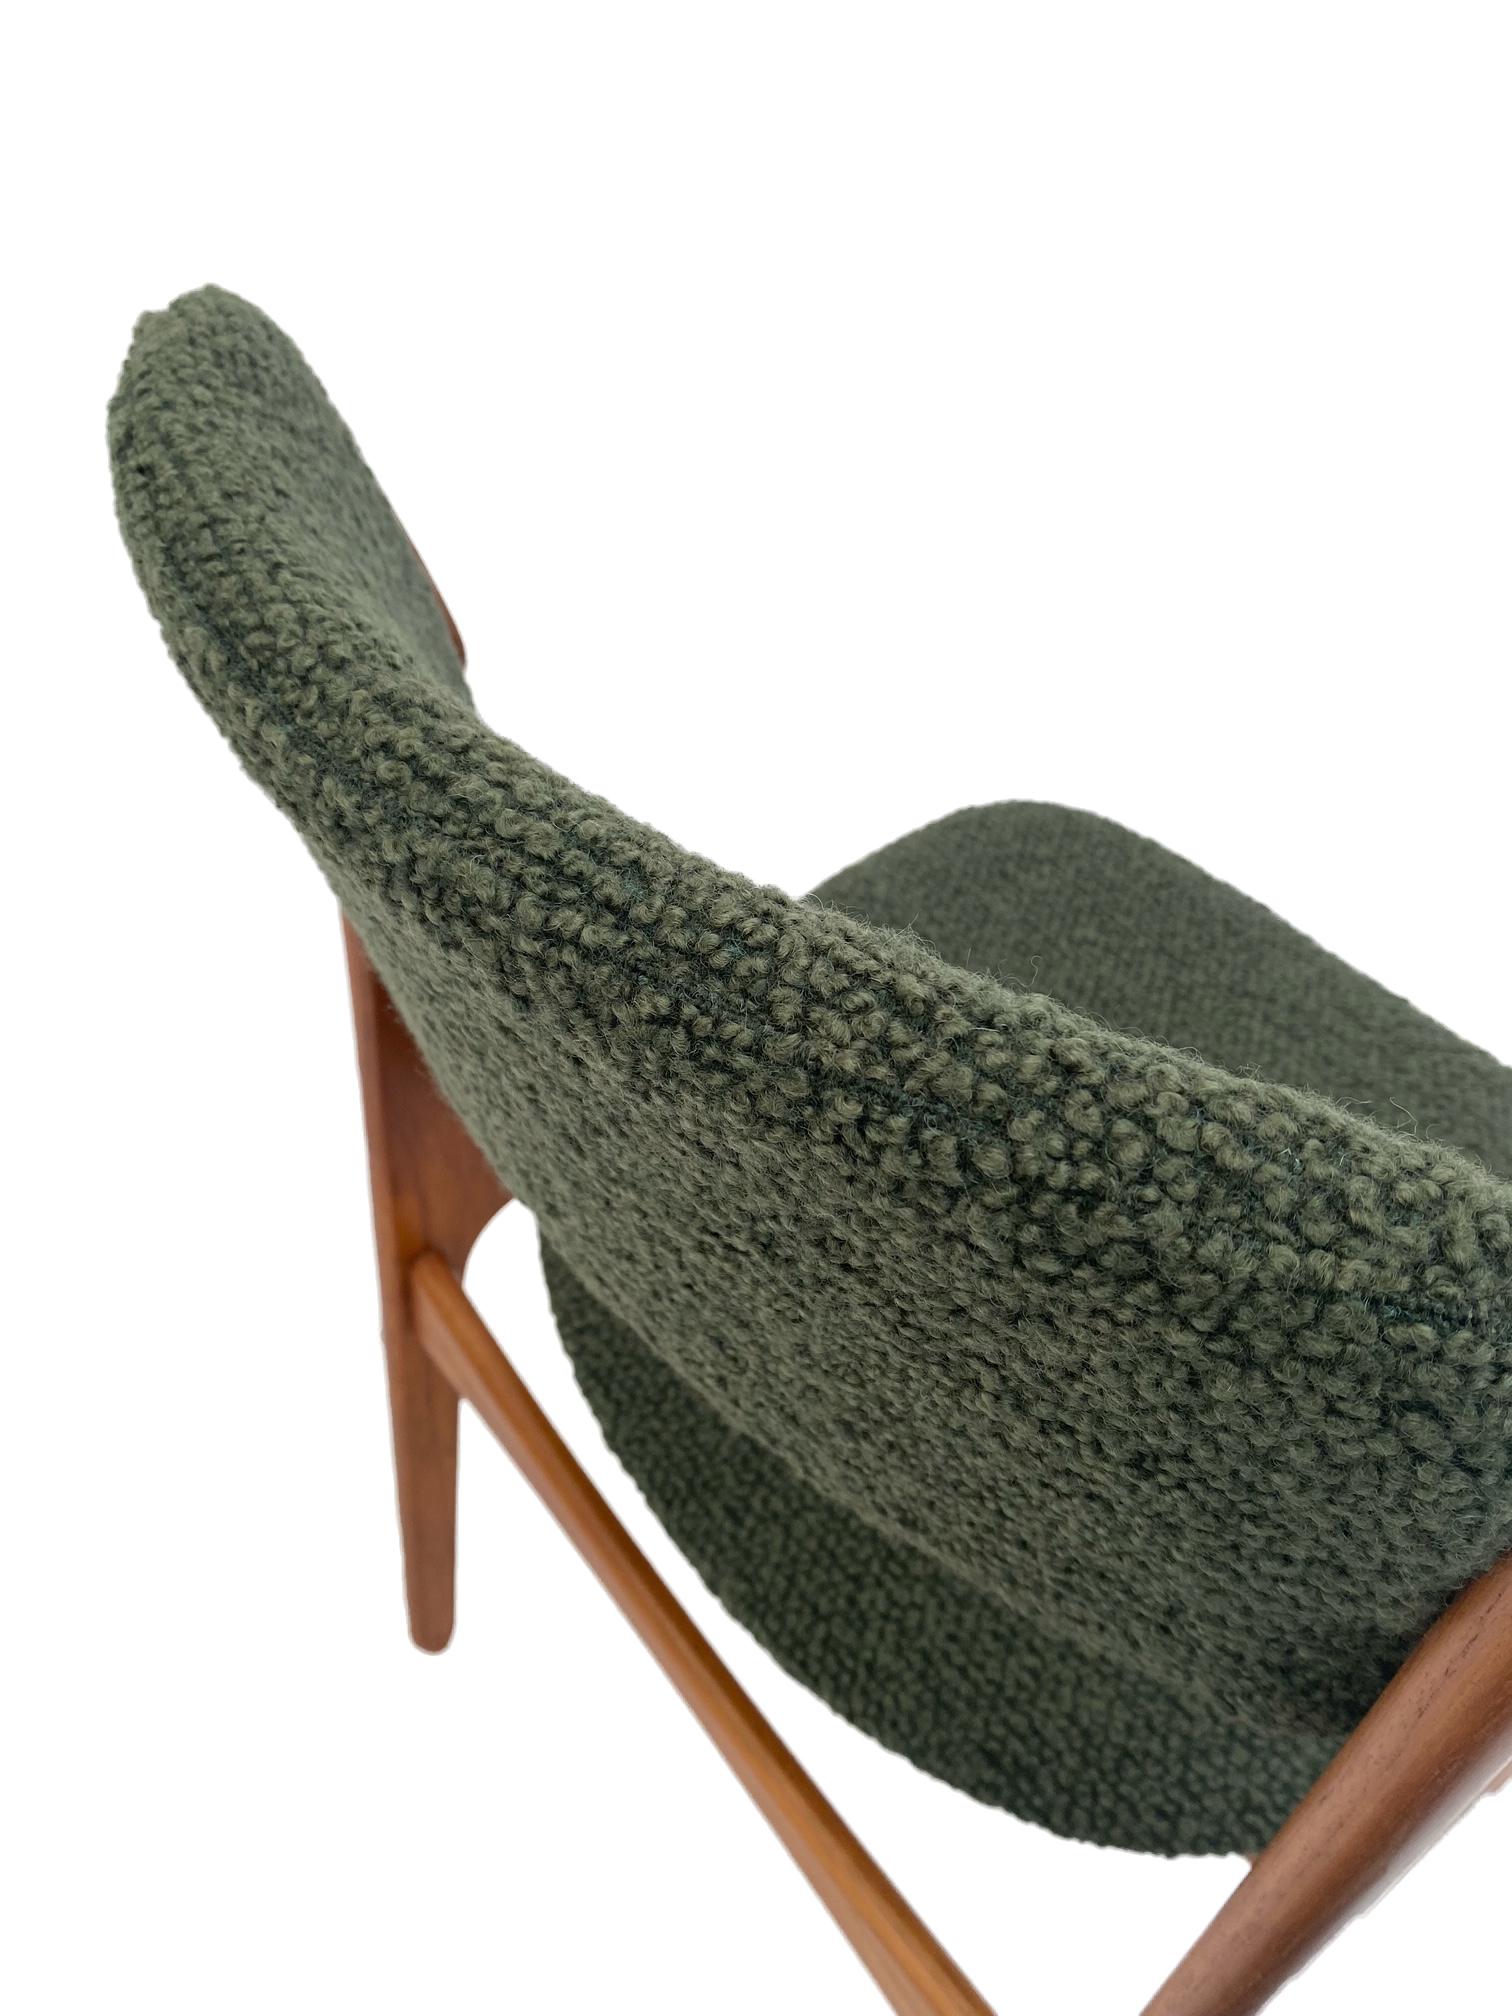 Wool Erik Buch Model 49 Teak and Green Boucle Desk Chair. Denmark, 1960s